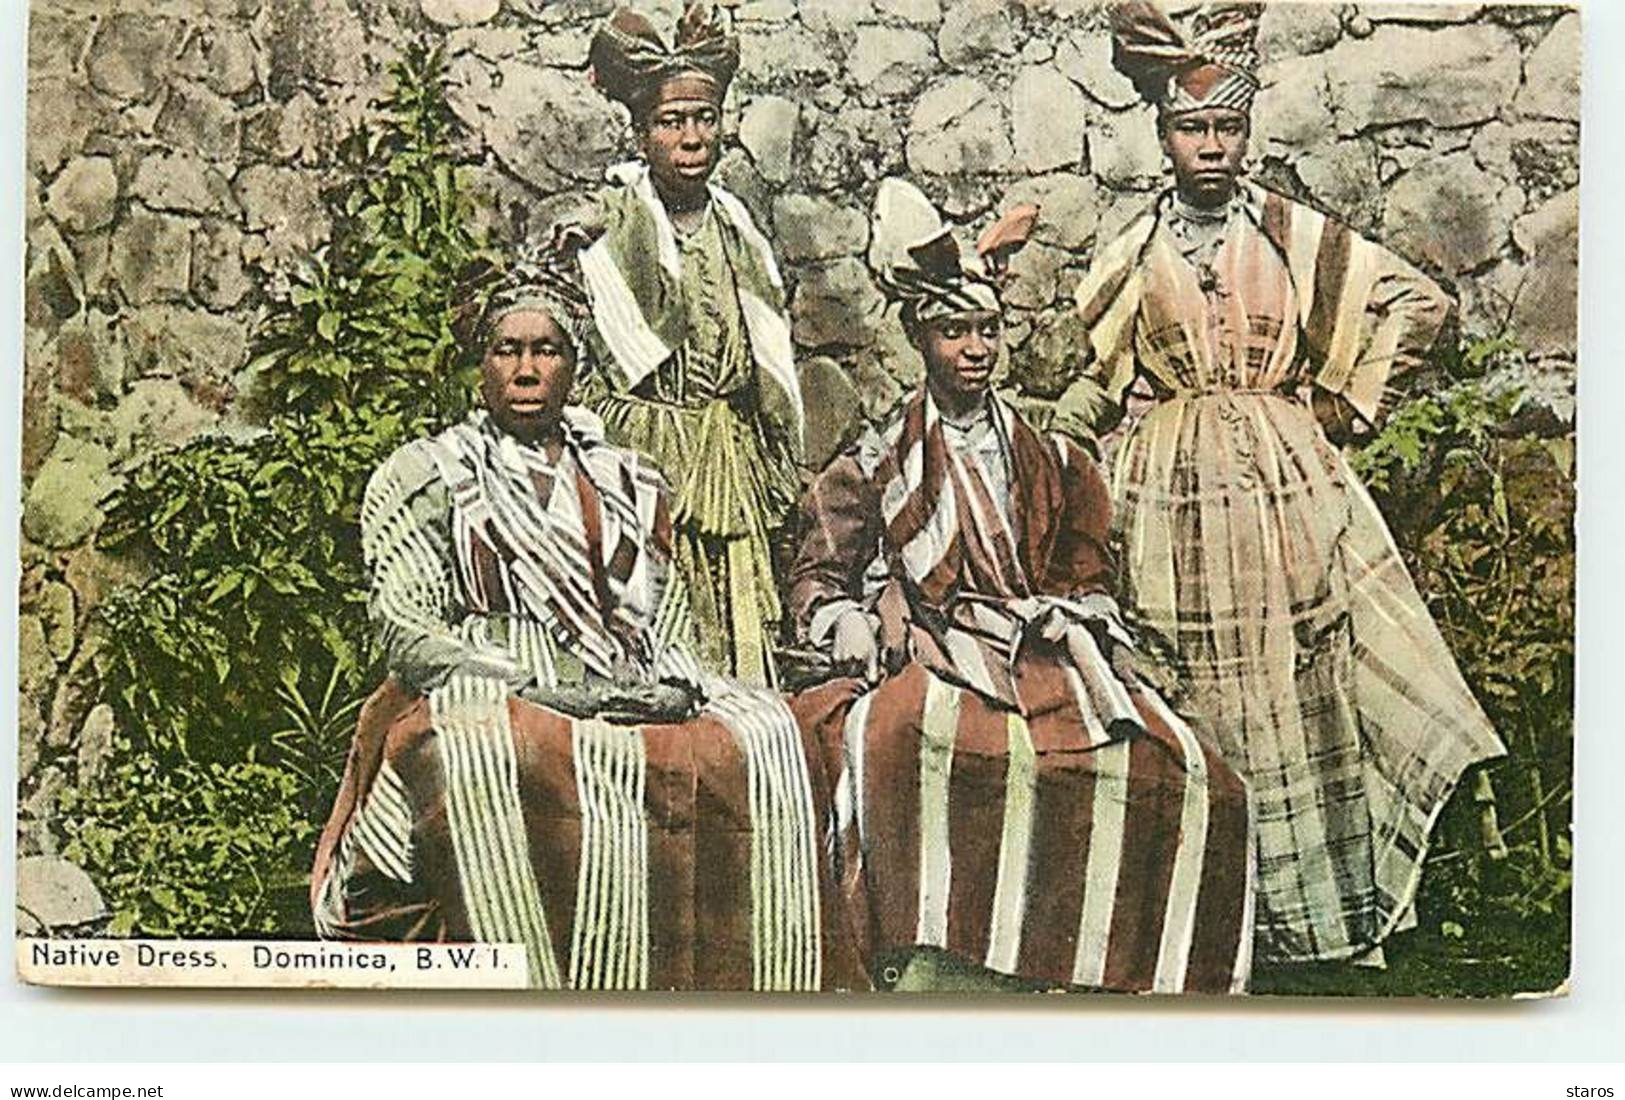 Dominica B.W.I. - Native Dress - Dominica